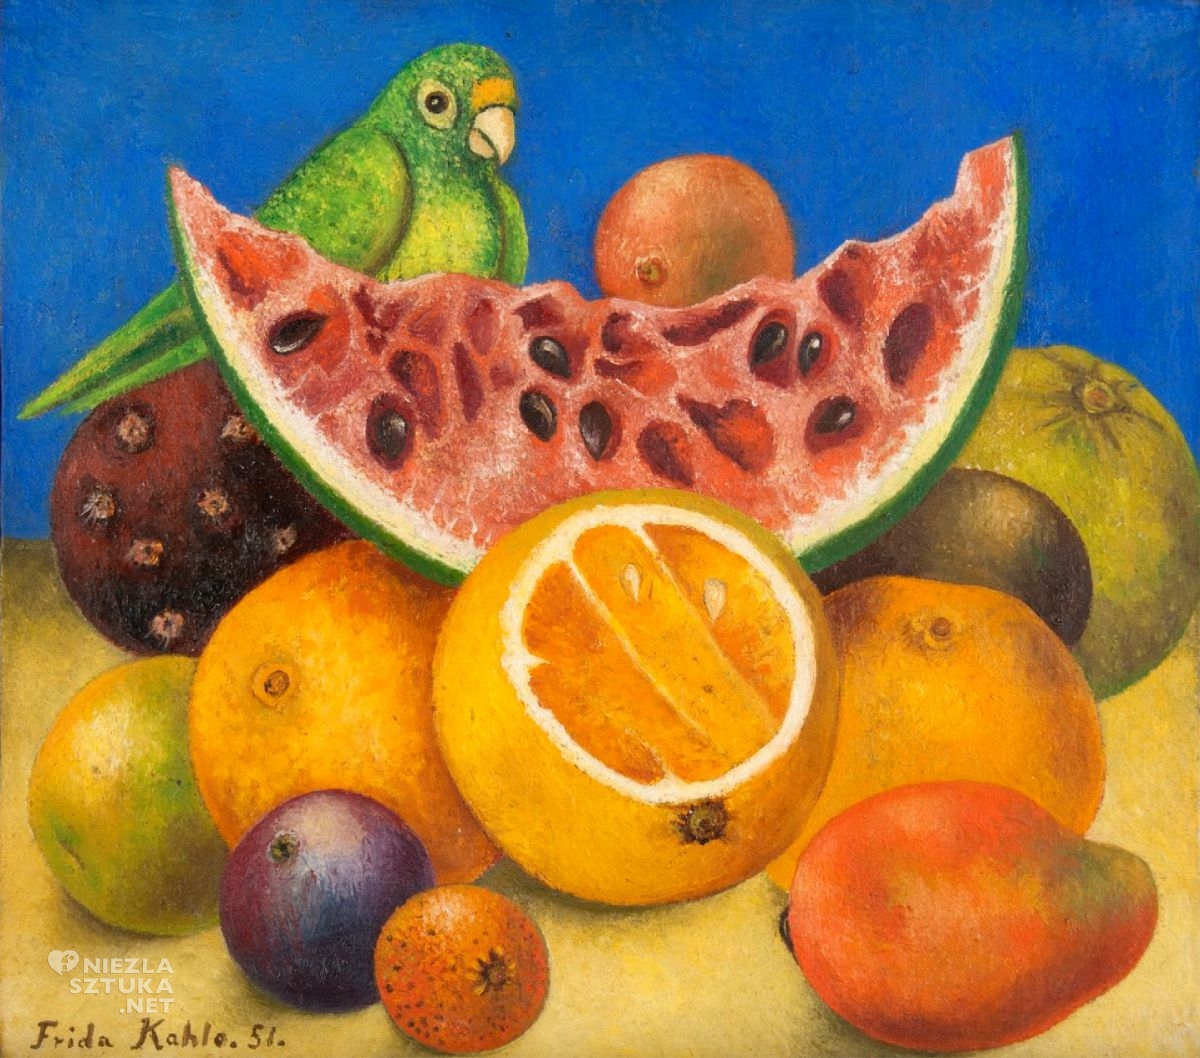 Frida Kahlo, Martwa natura z papugą, kobiety w sztuce, sztuka meksykańska, Meksyk, owoce, ptak, still life with parrot and fruit, niezła sztuka